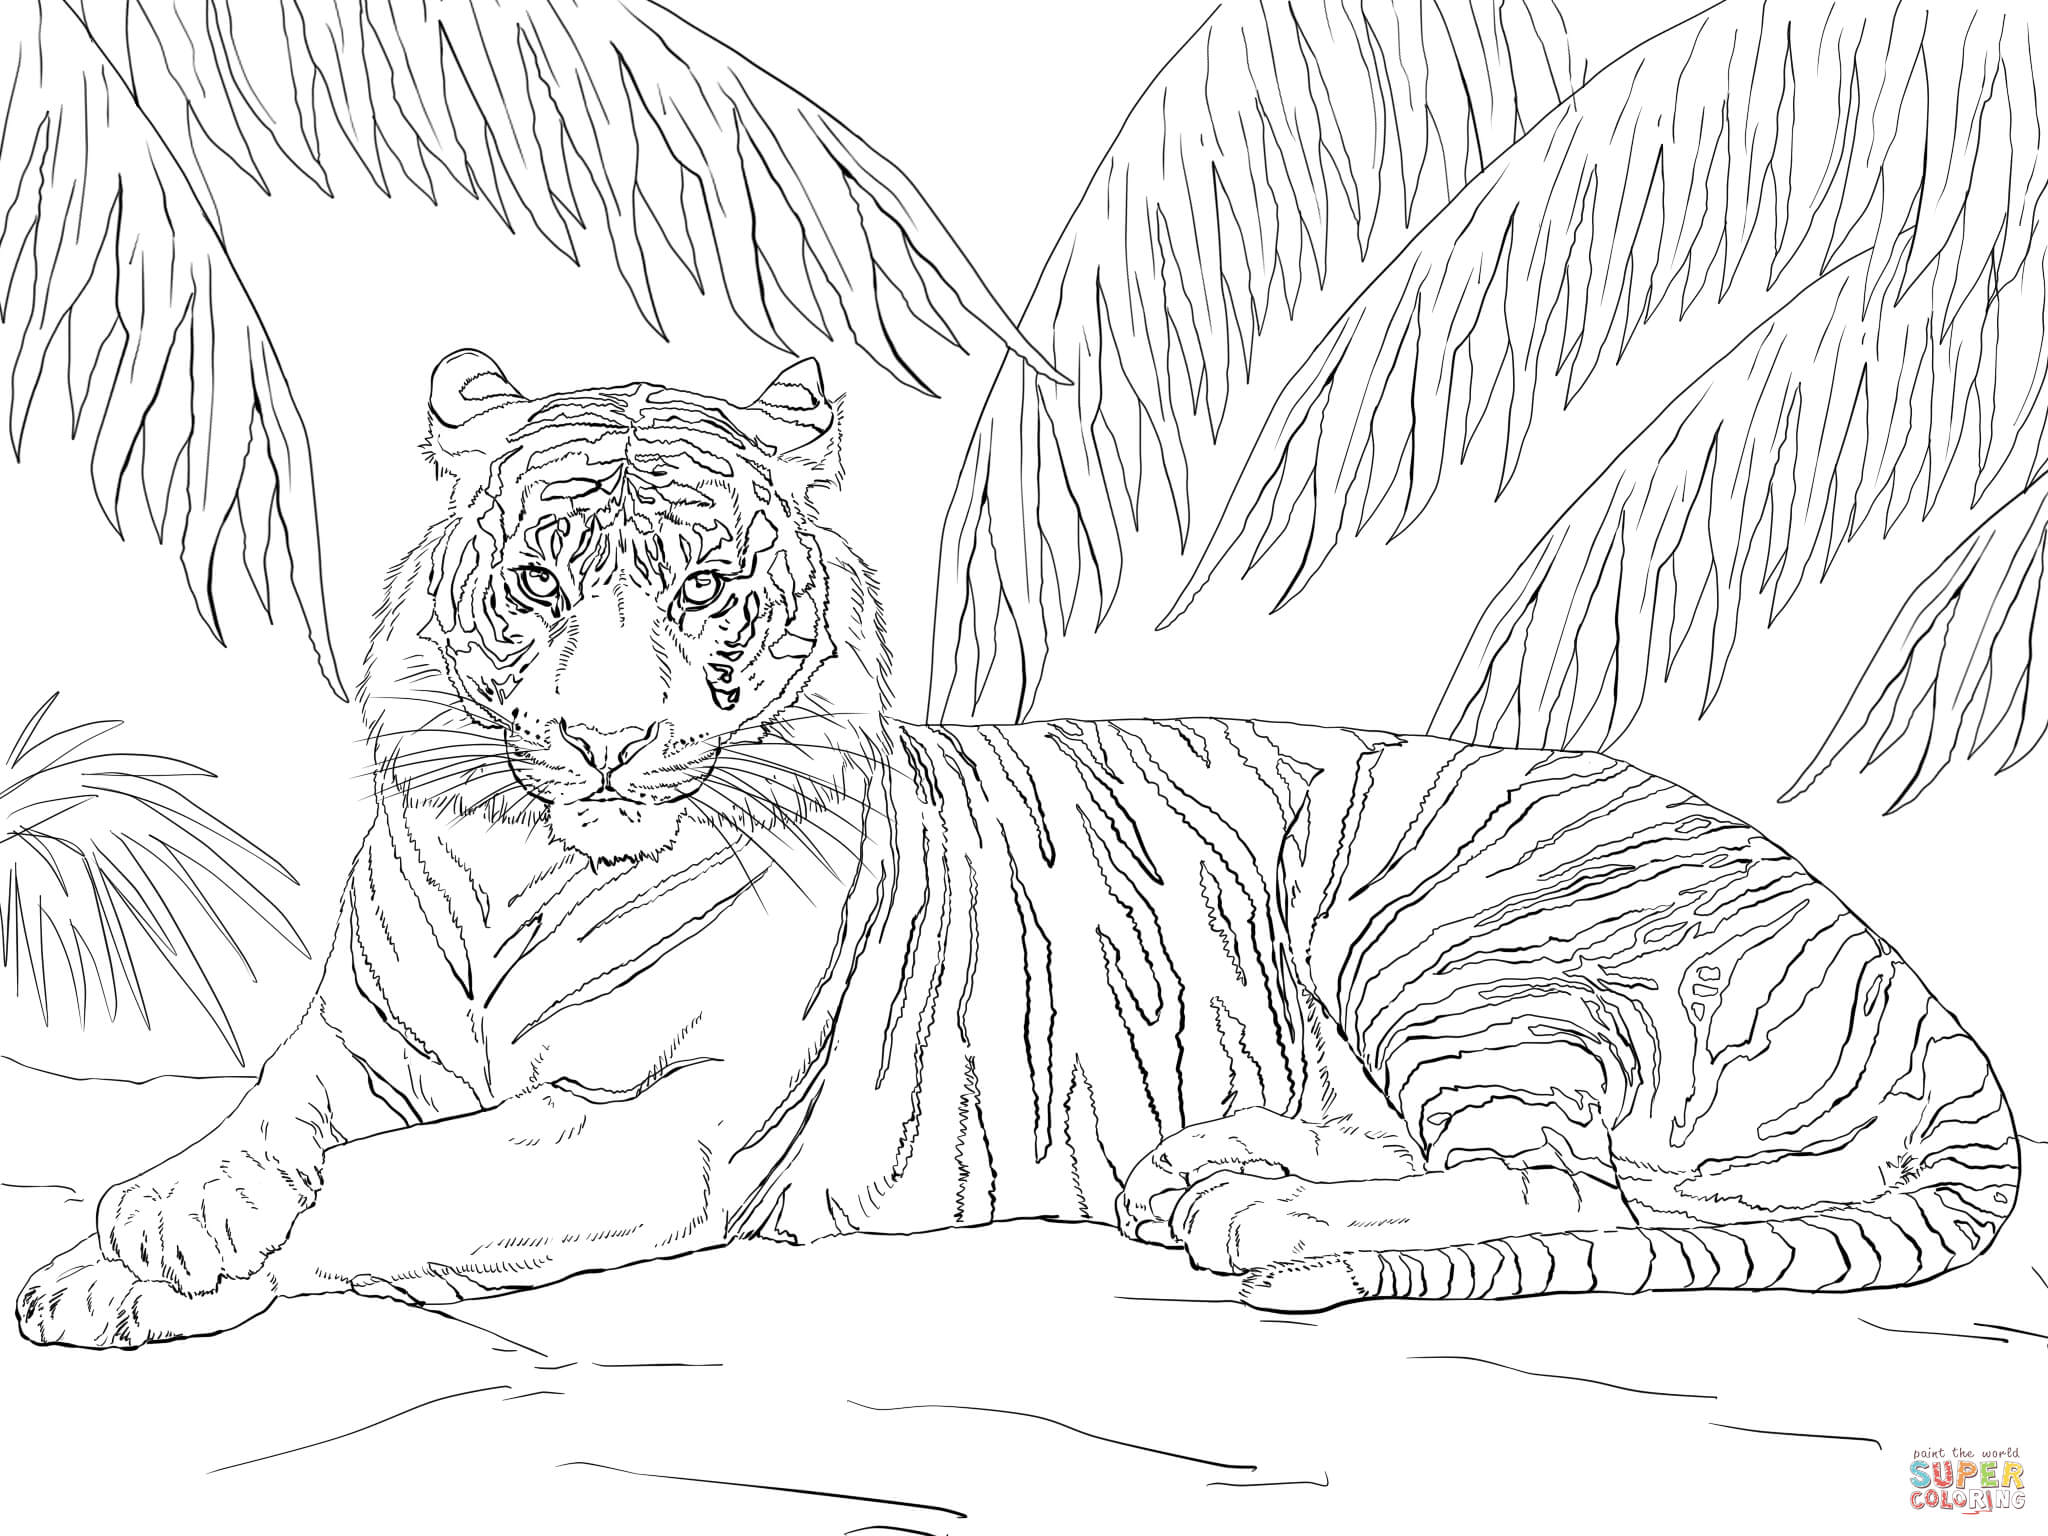 Sumatran tiger laying down coloring page free printable coloring pages